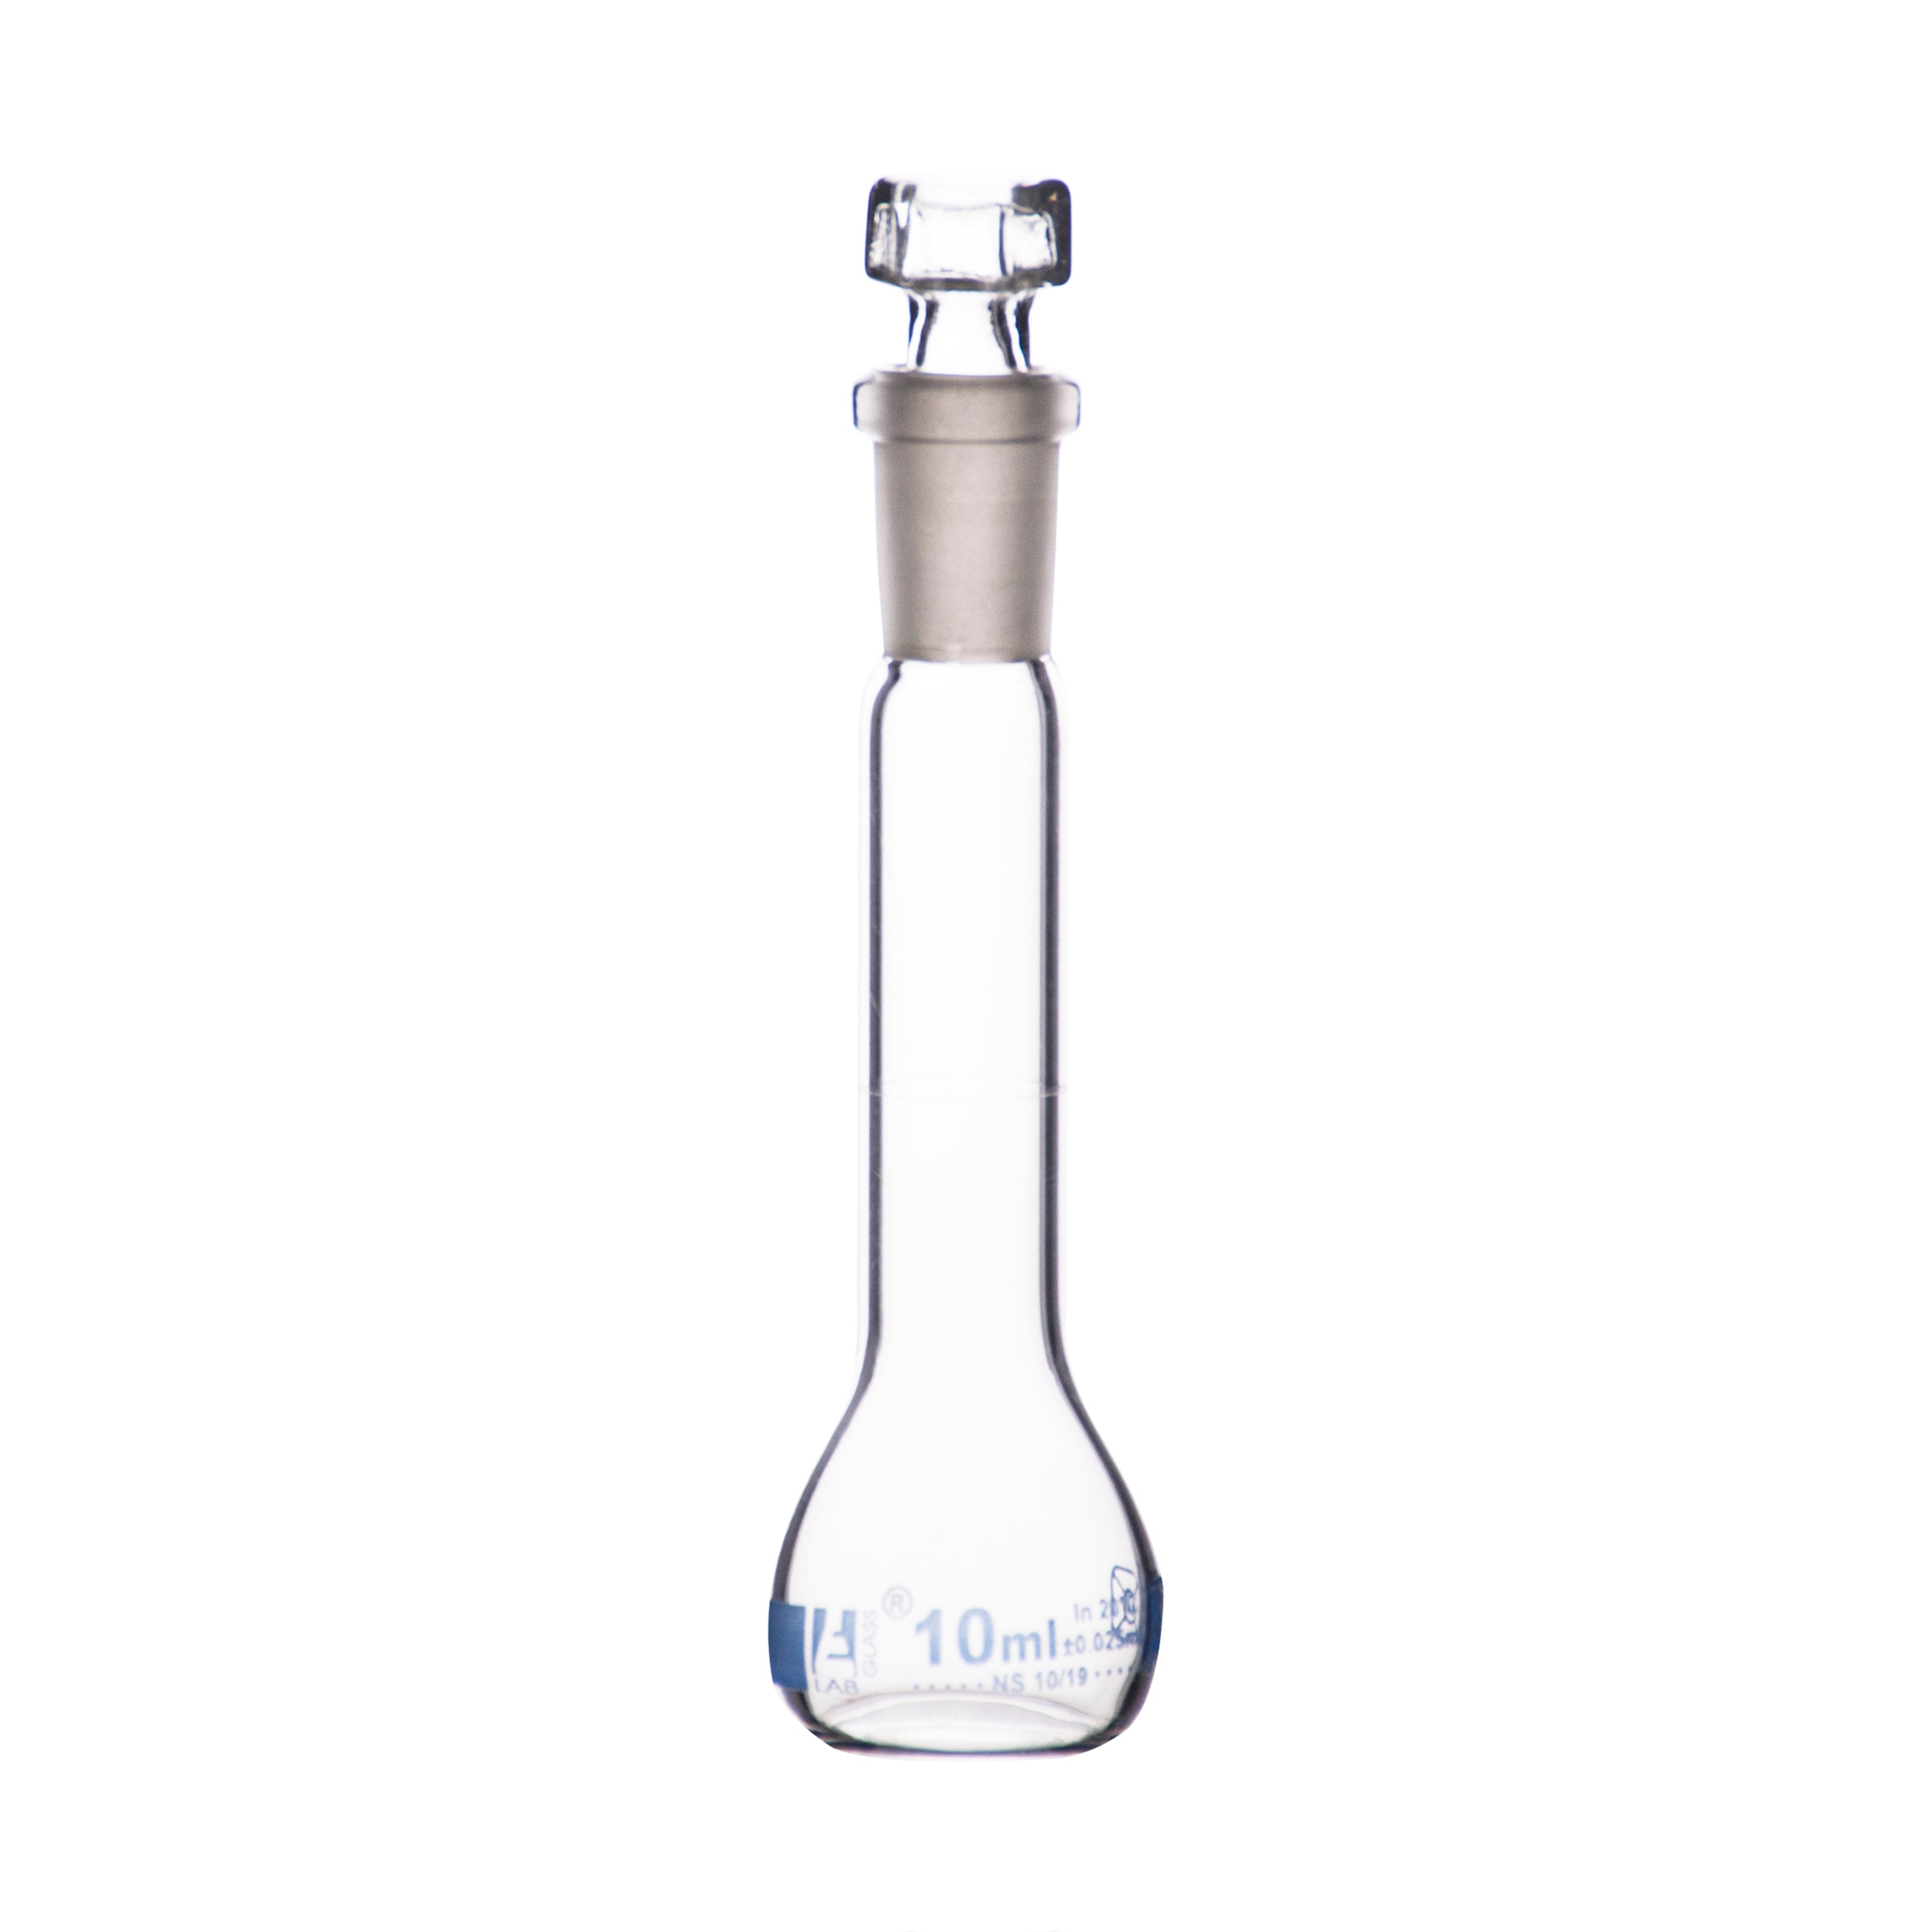 Borosilicate Volumetric Flask with Hollow Glass Stopper, 10ml, Class B, Blue Print, Autoclavable